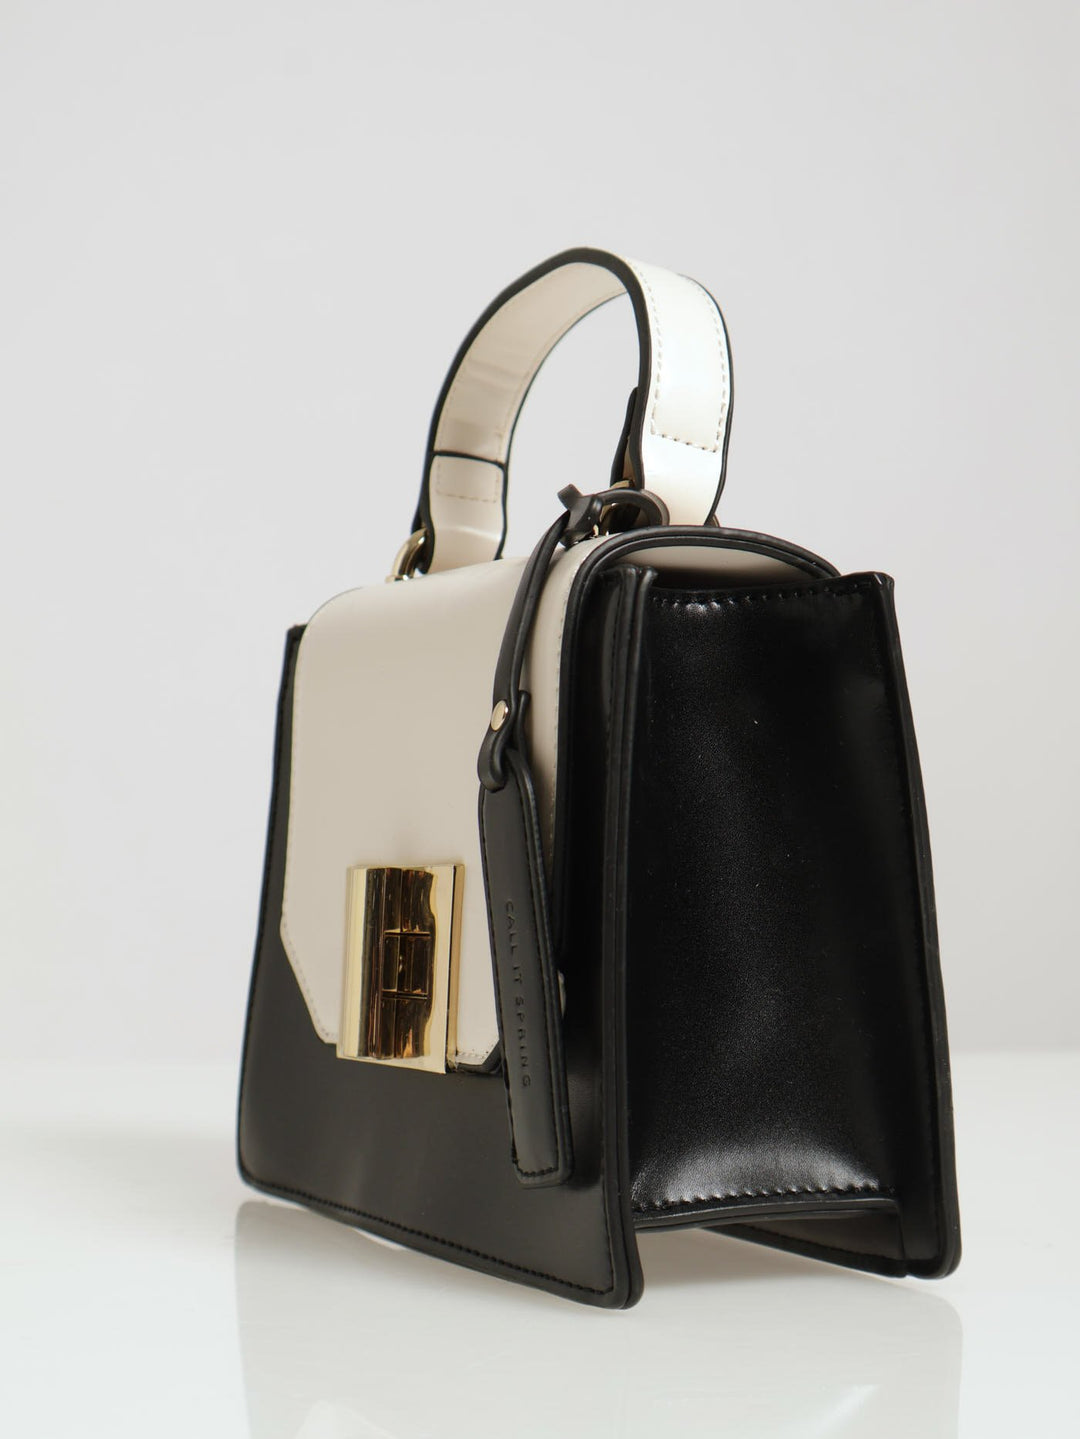 Gem Top Handle Bag - Black/White